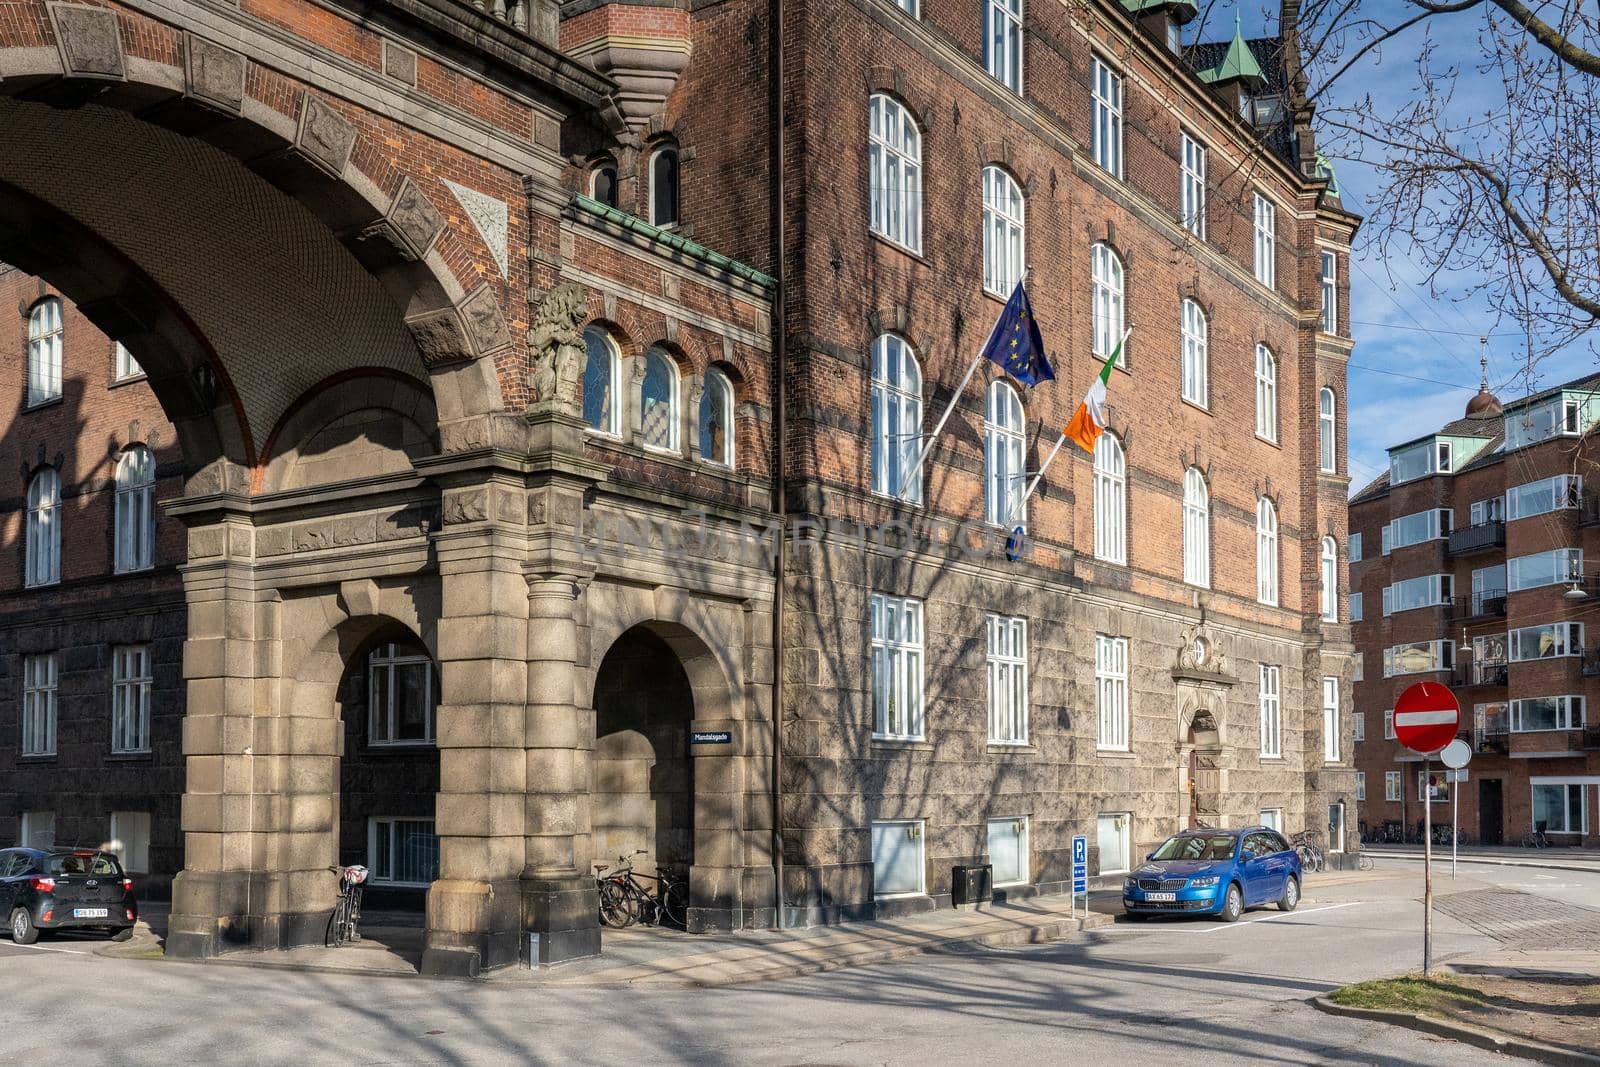 Embassy of Ireland in Copenhagen, Denmark by oliverfoerstner